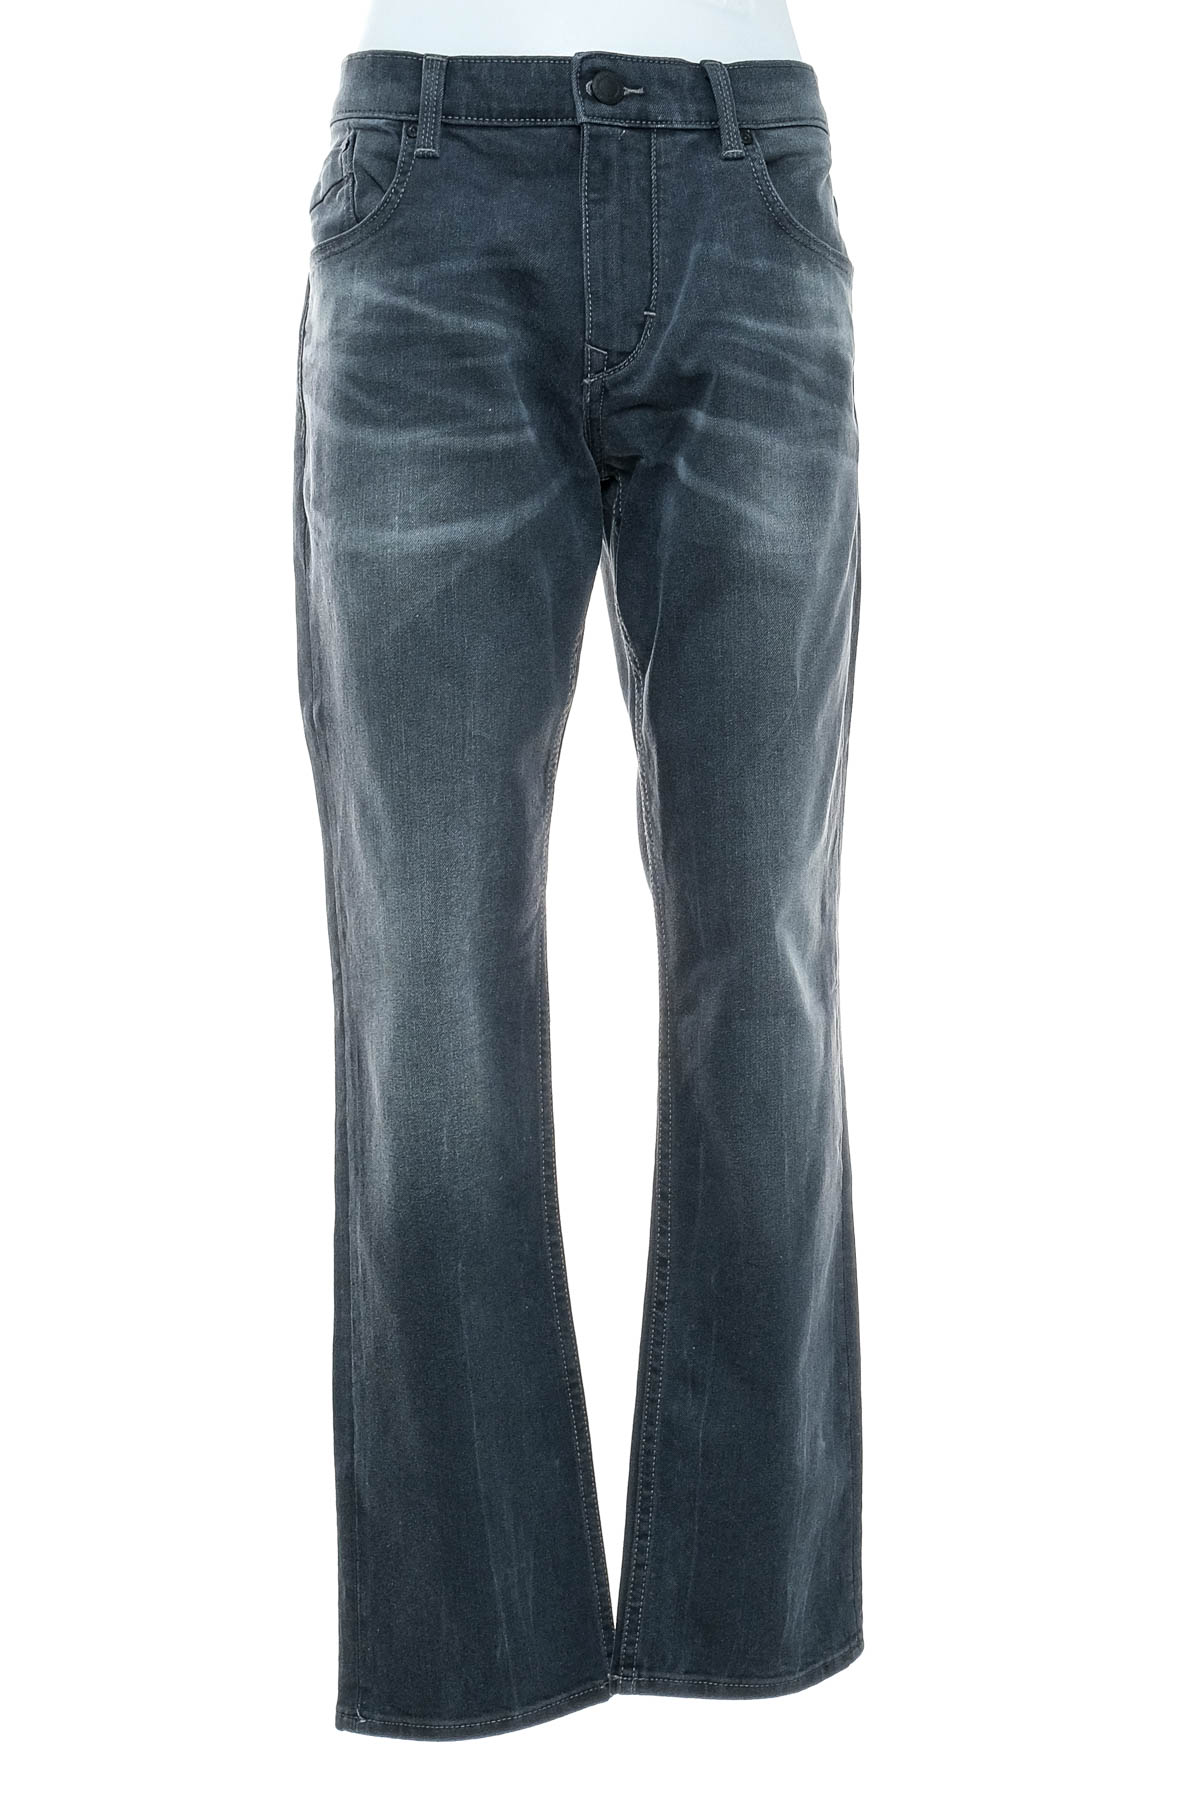 Men's jeans - TOM TAILOR - 0